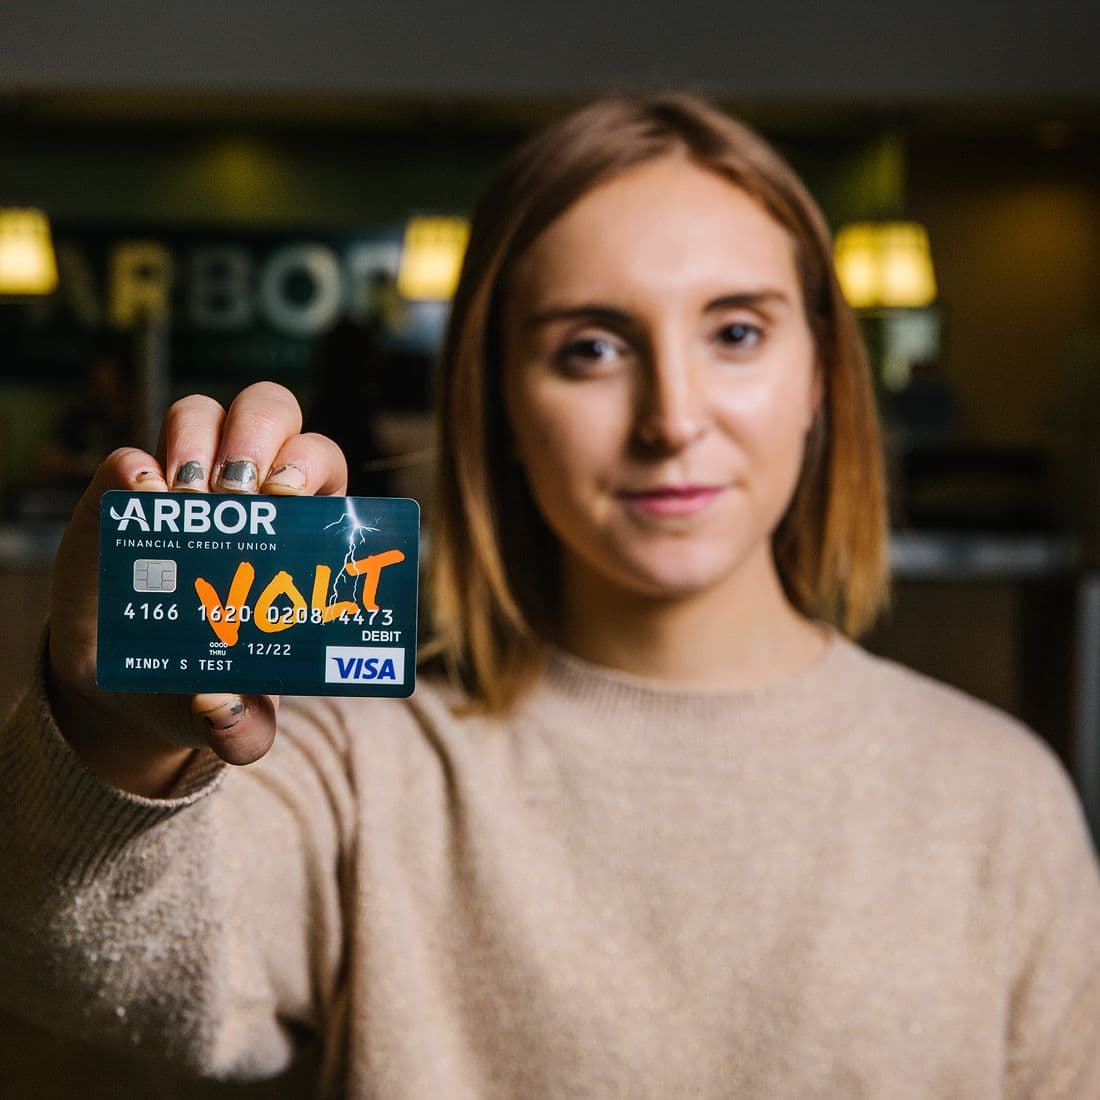 Arbor Volt customer displaying debit card.